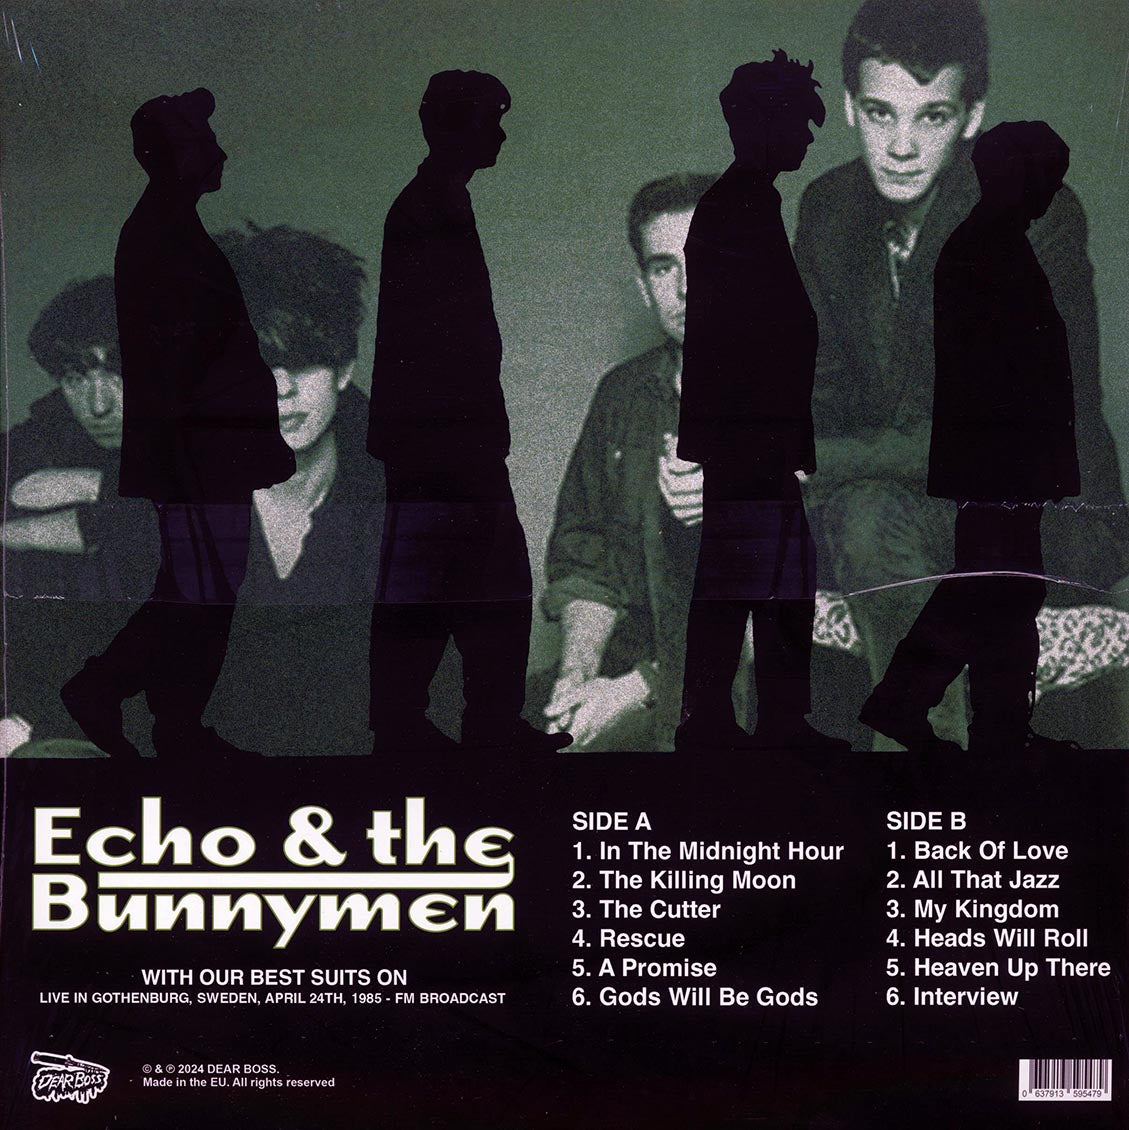 Echo & The Bunnymen - With Our Best Suits On: Live In Gothenburg, Sweden, April 24th, 1985 - Vinyl LP, LP